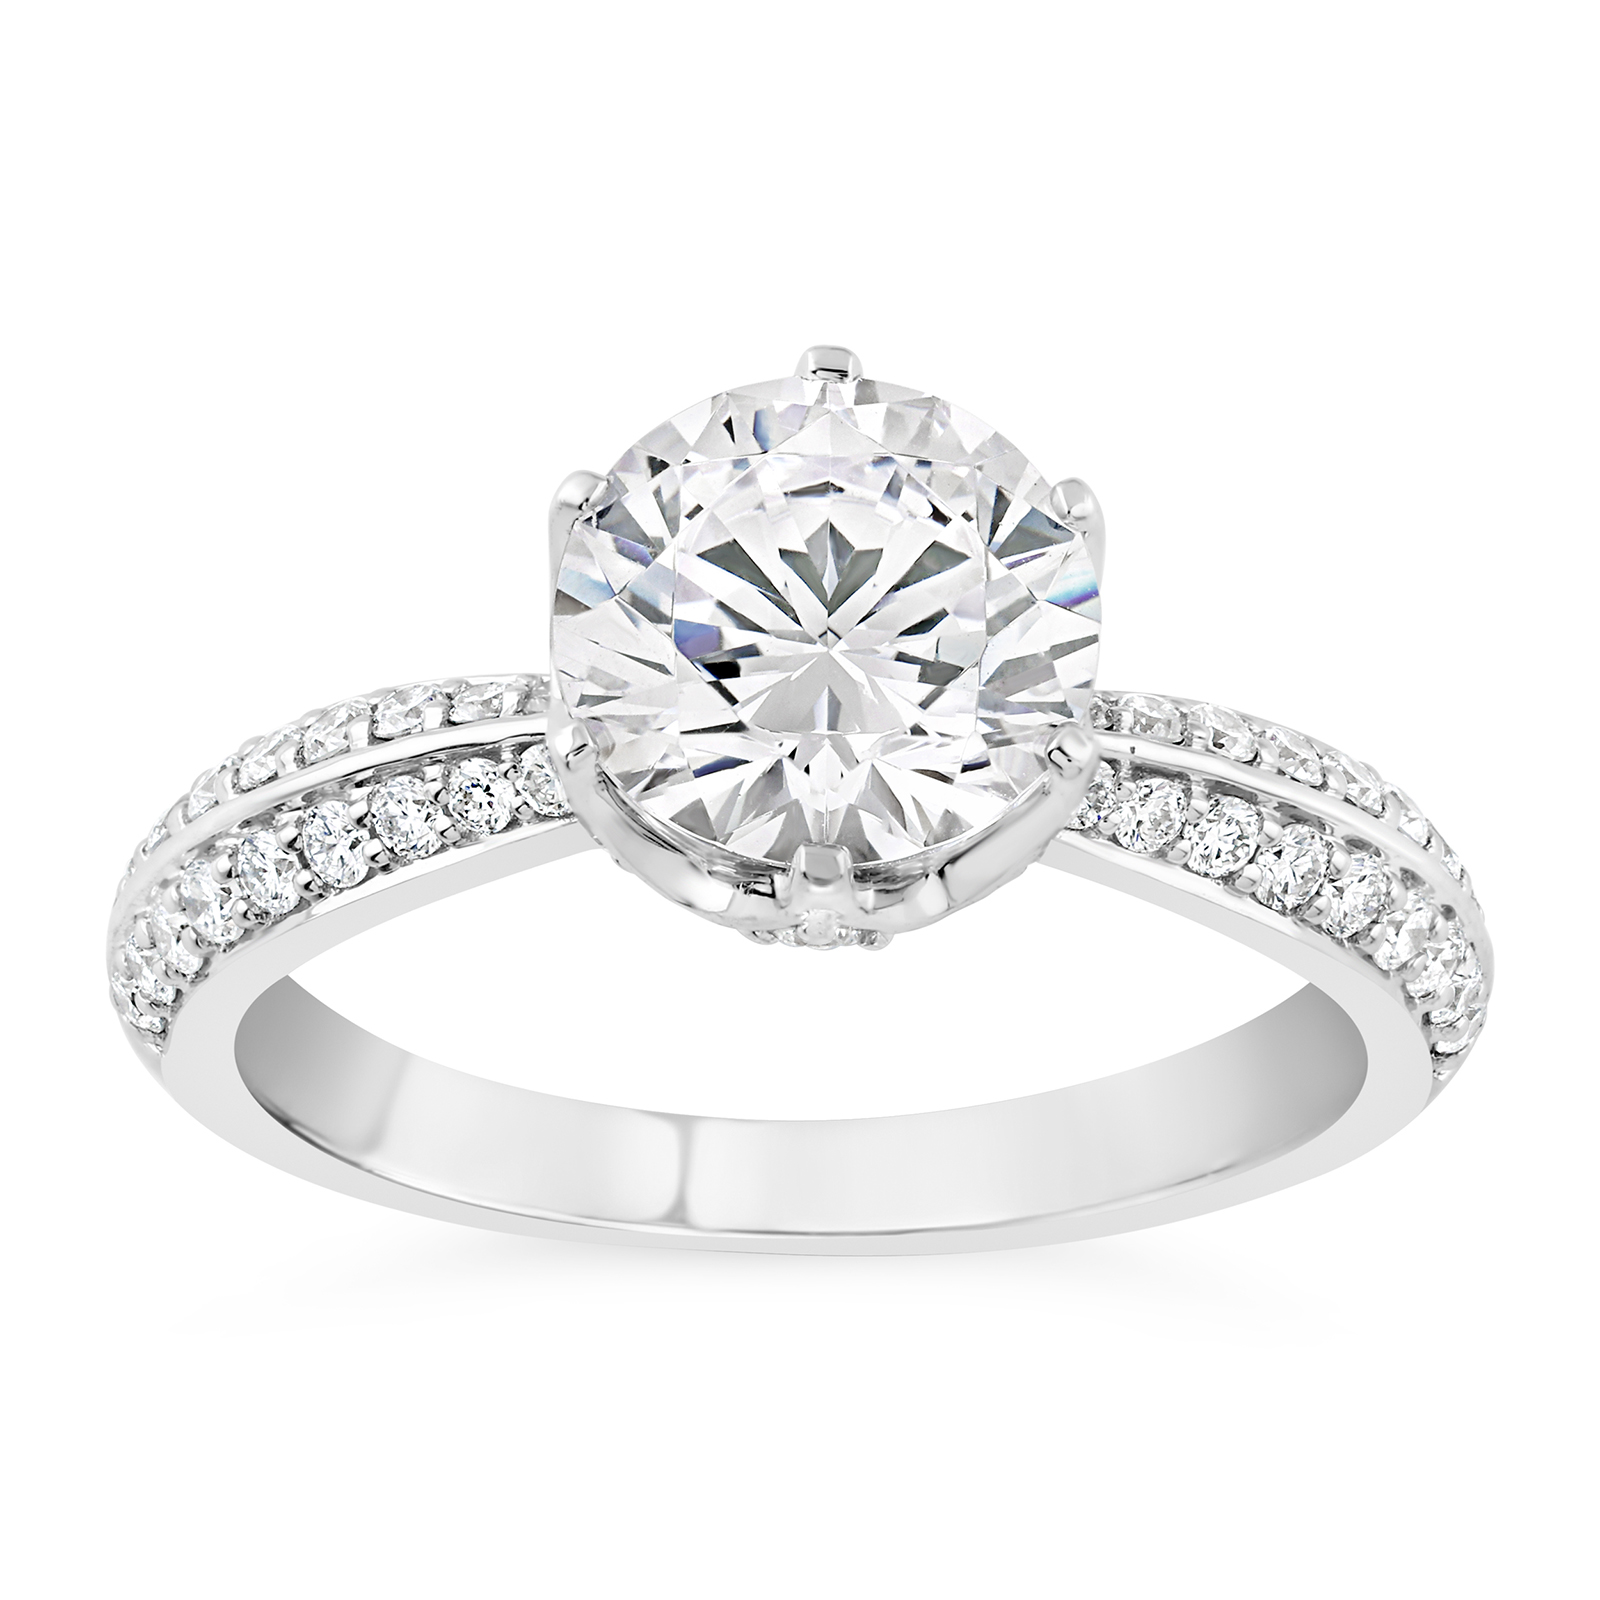 Platinum Knife-Edge Pave Diamond Engagement Ring